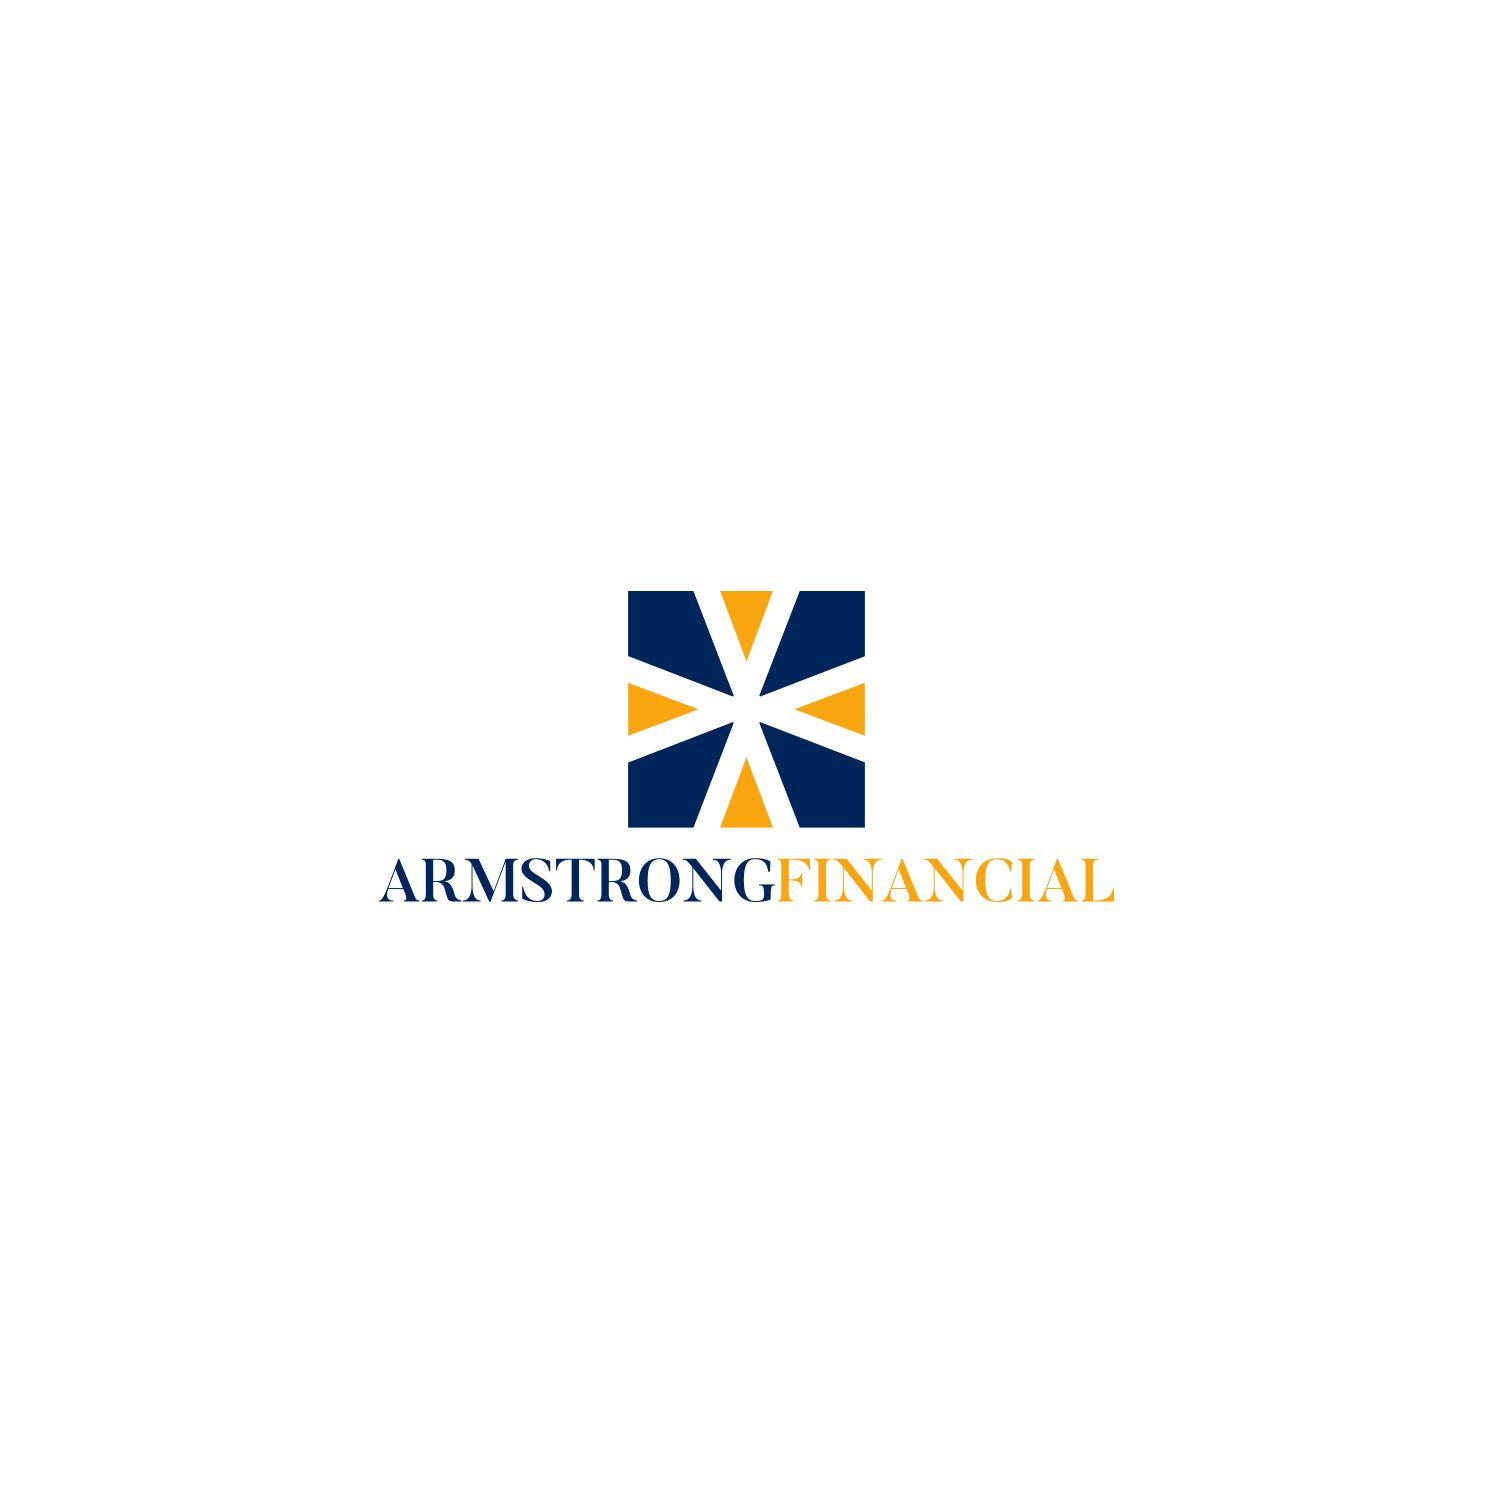 M Financial Logo - Serious, Professional, Financial Logo Design for Armstrong Financial ...